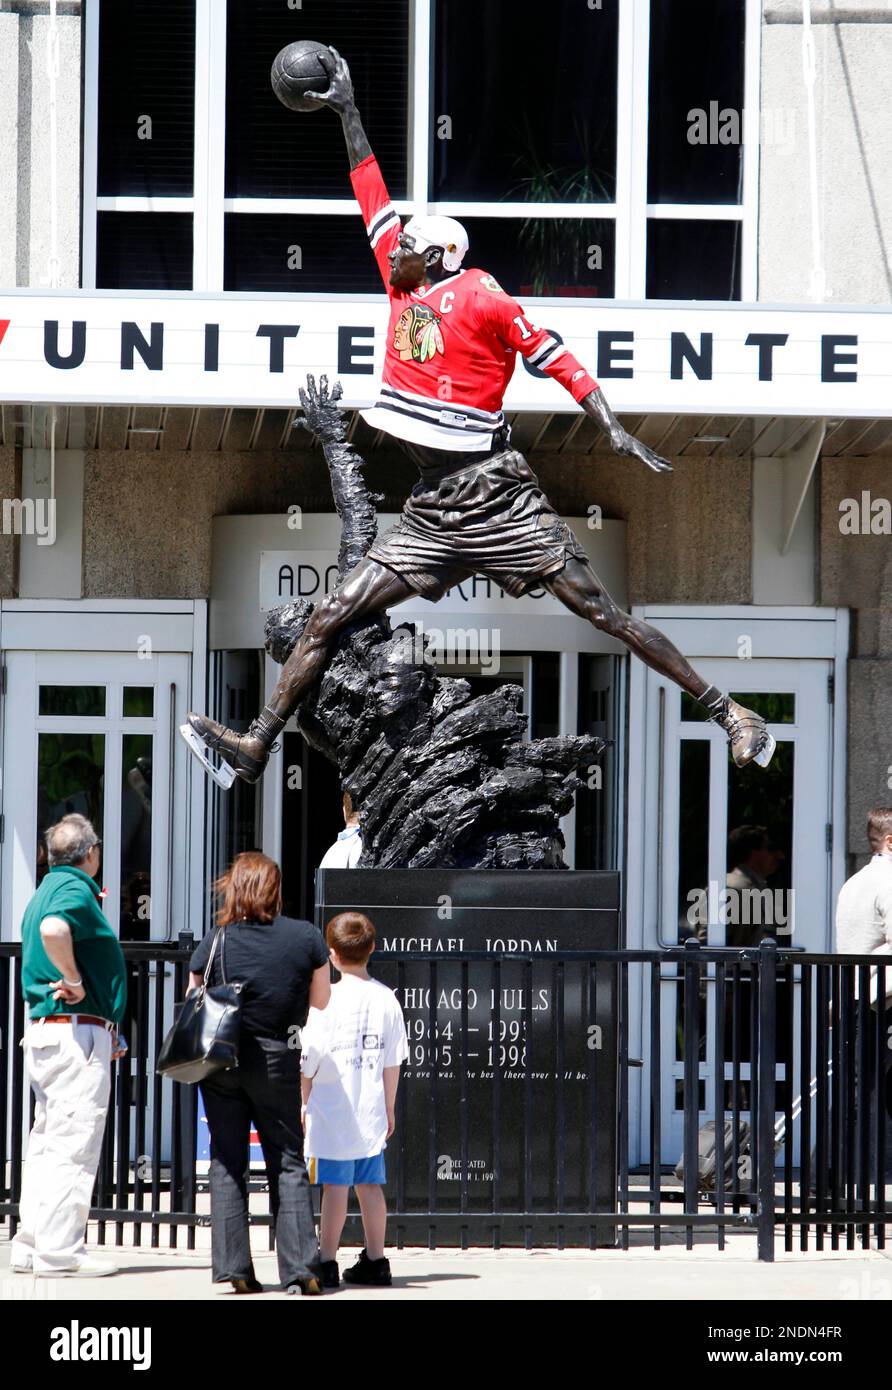 Michael Jordan statue centerpiece of United Center's East addition